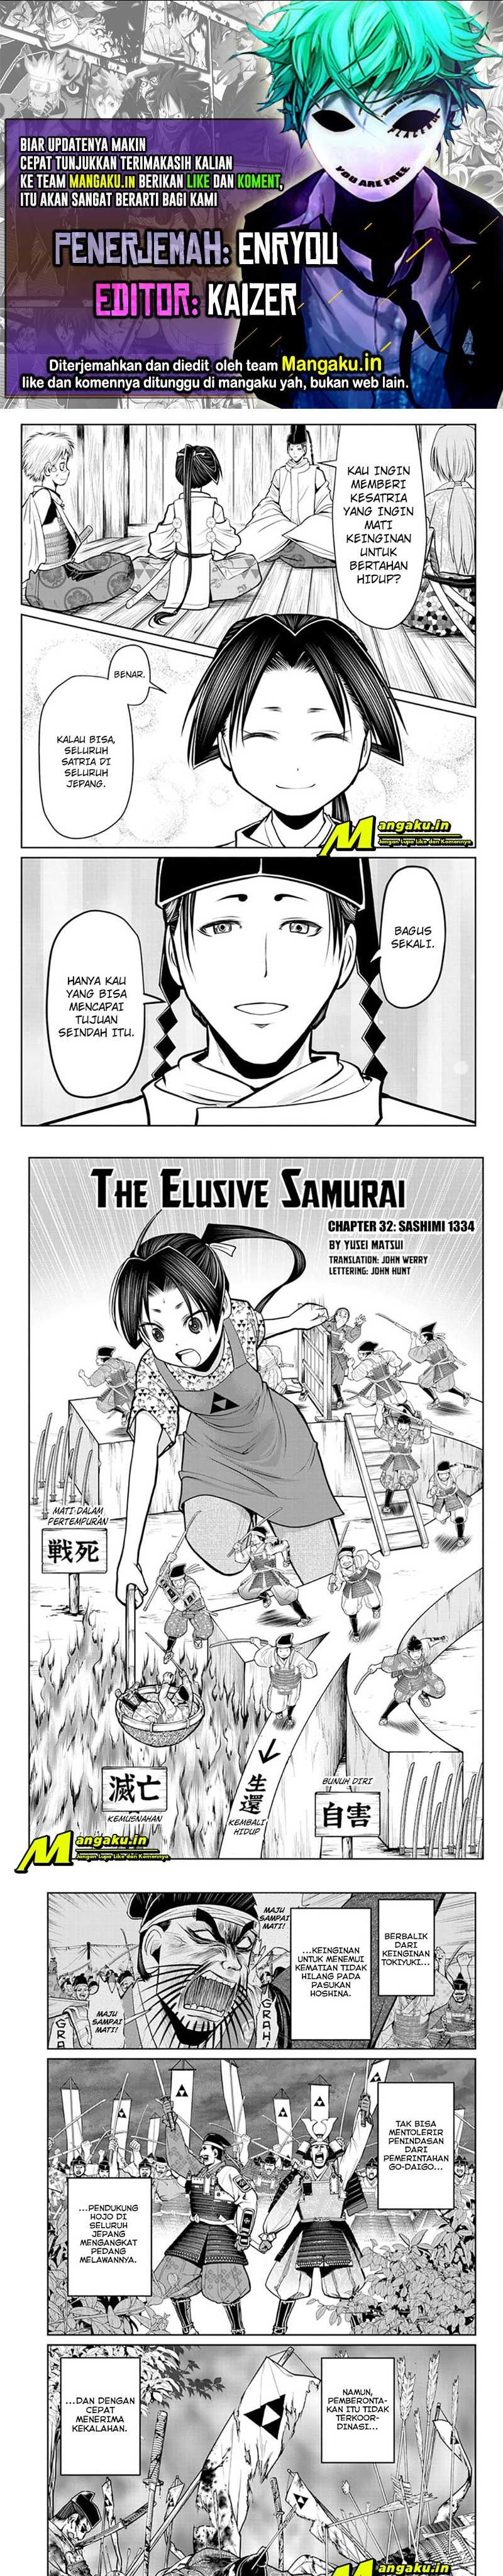 The Elusive Samurai Chapter 32 1